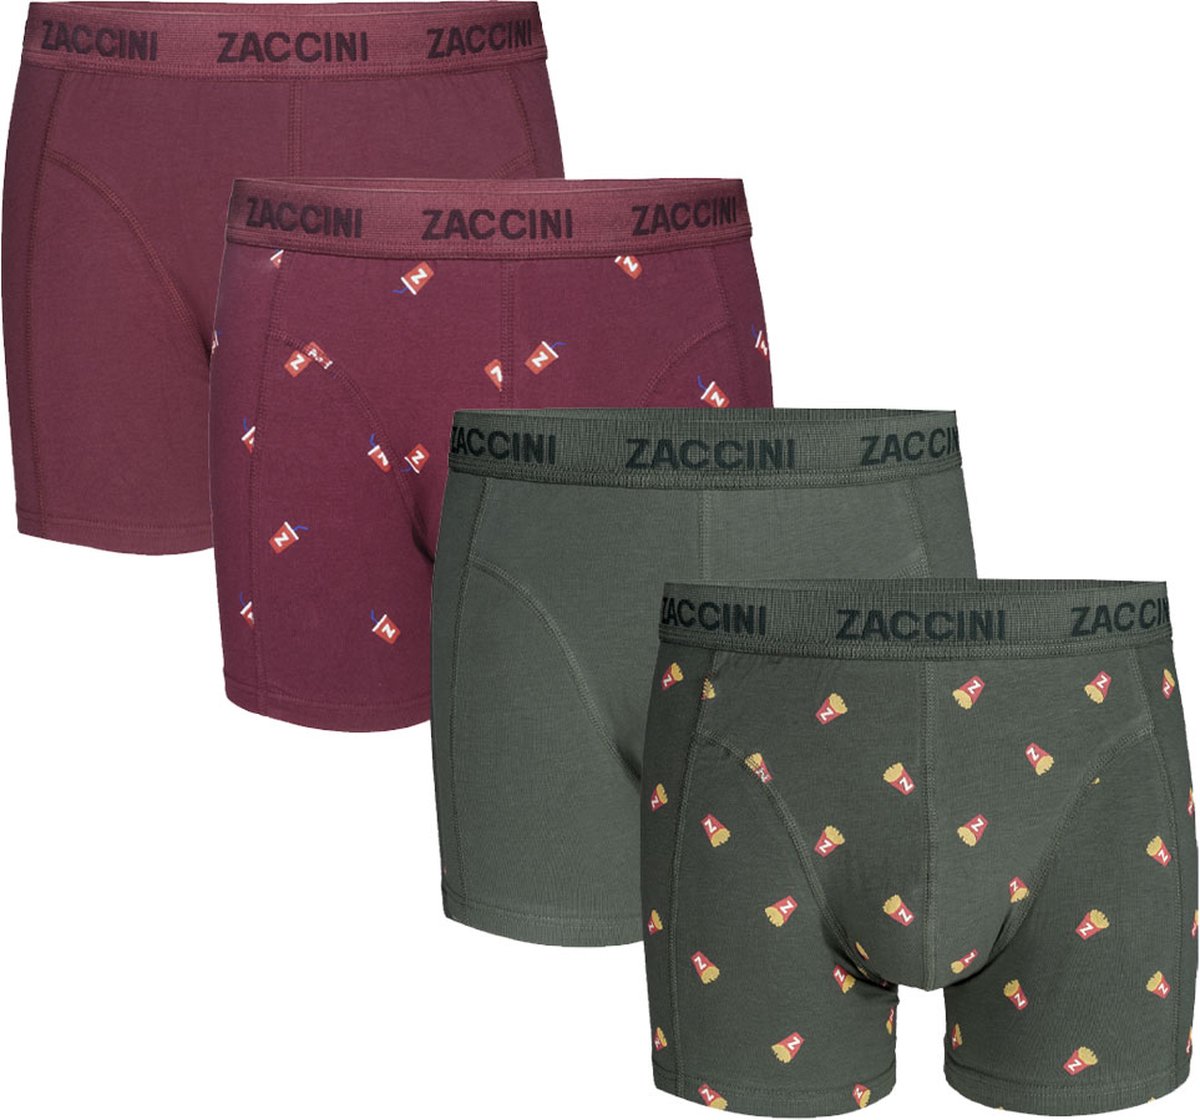 Zaccini Boxershorts 4-pack Snack Pack